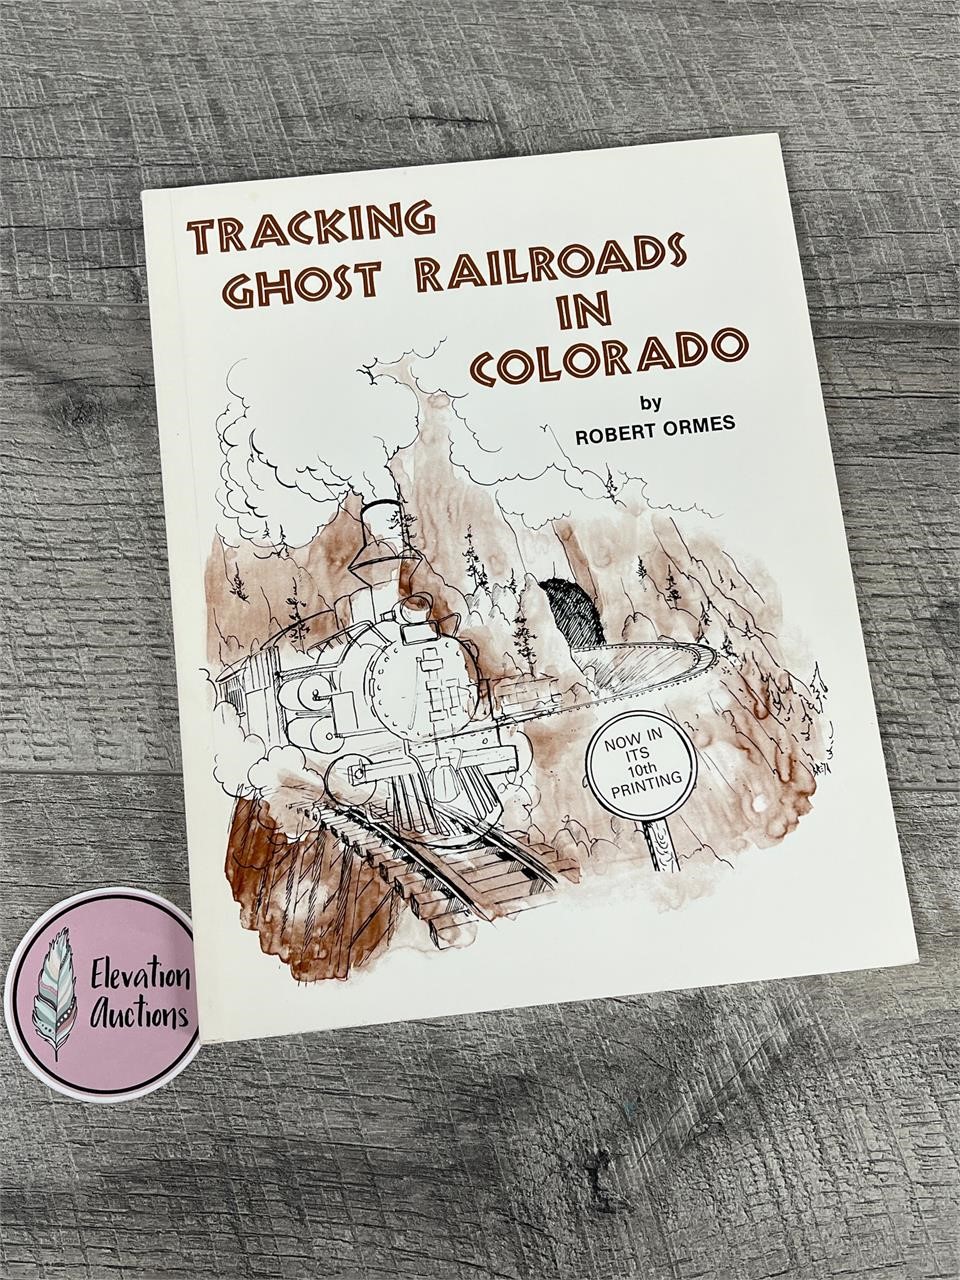 1992 Ghost Railroads of Colorado book